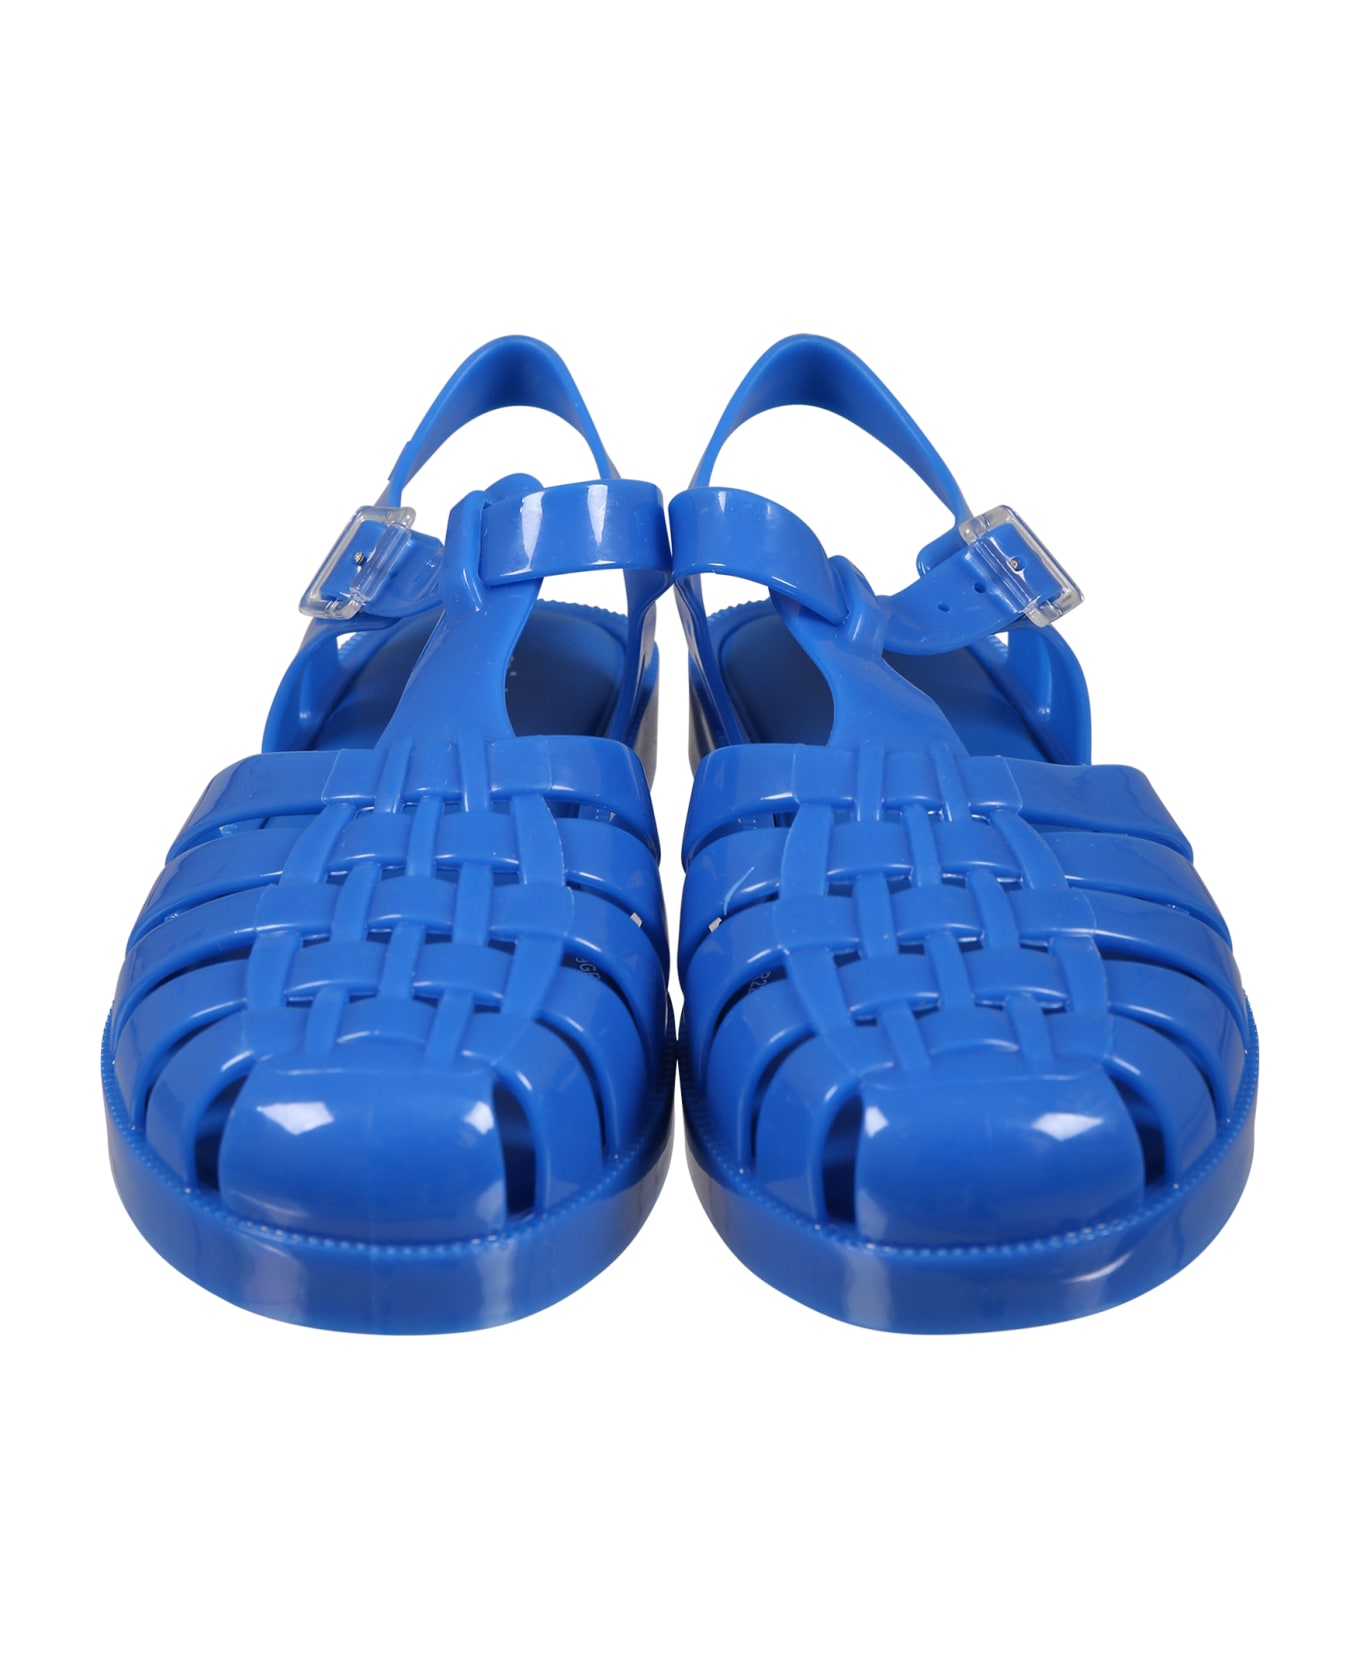 Melissa Blue Sandals For Kids With Logo - Blue シューズ